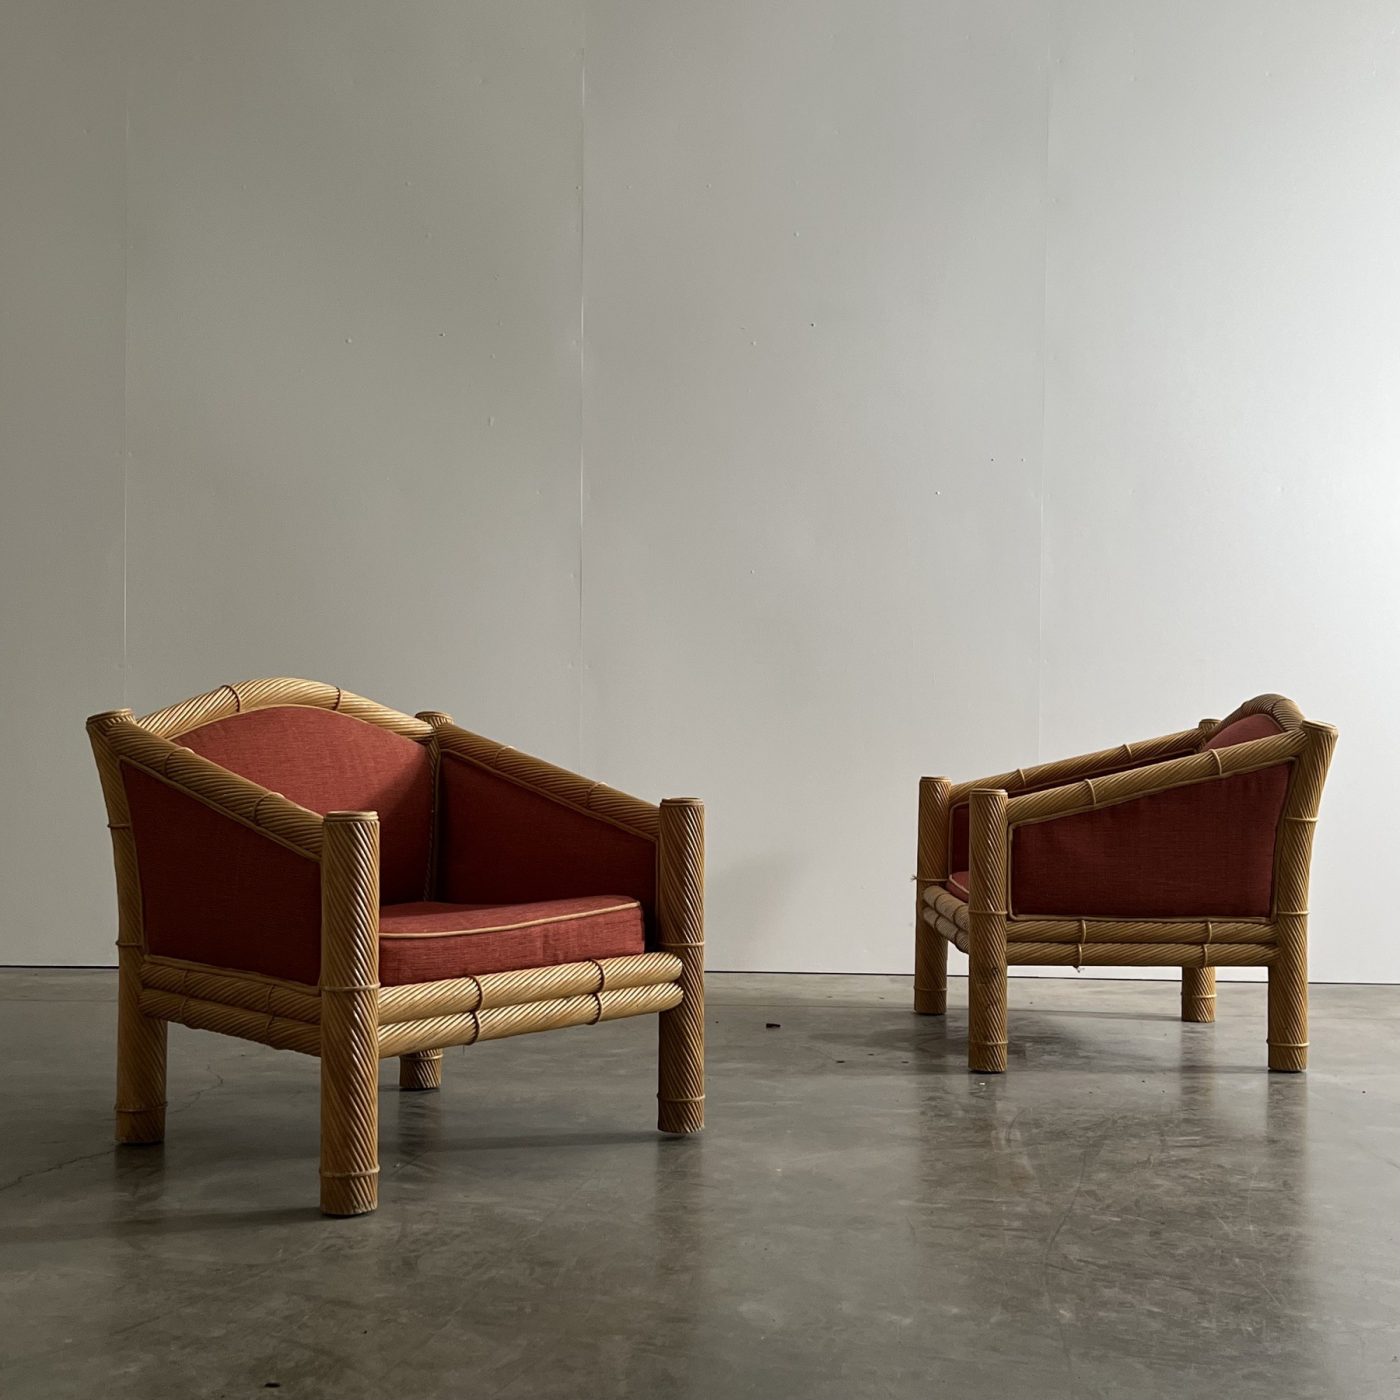 objet-vagabond-rattan-armchairs0005